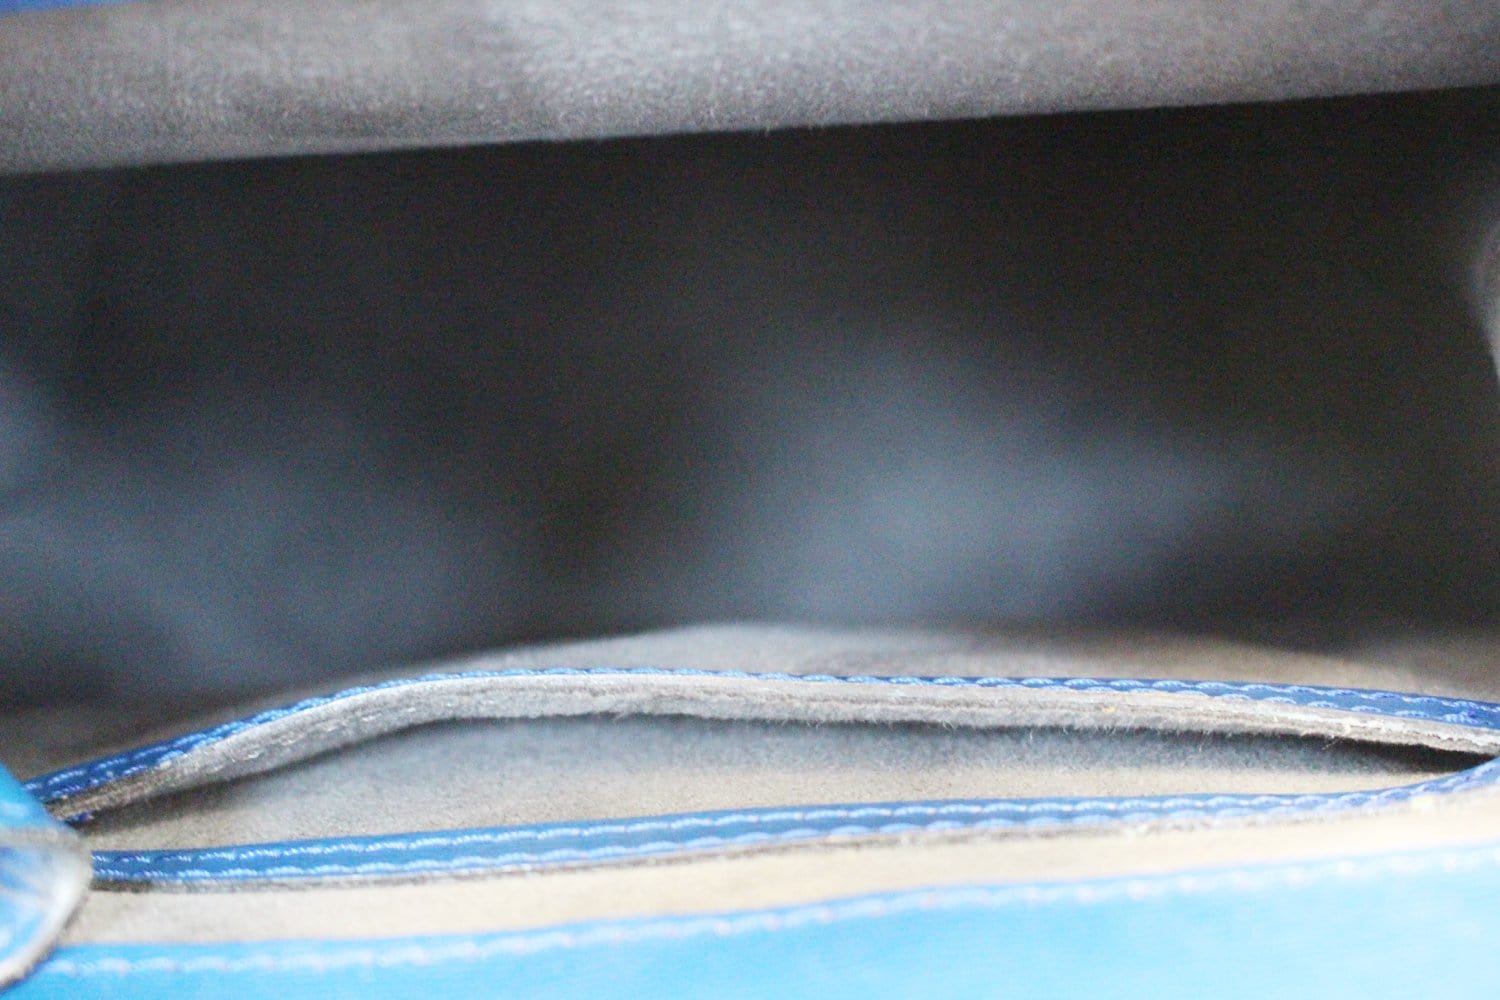 LOUIS VUITTON Epi Leather Blue Cluny Shoulder Bag - 20% OFF